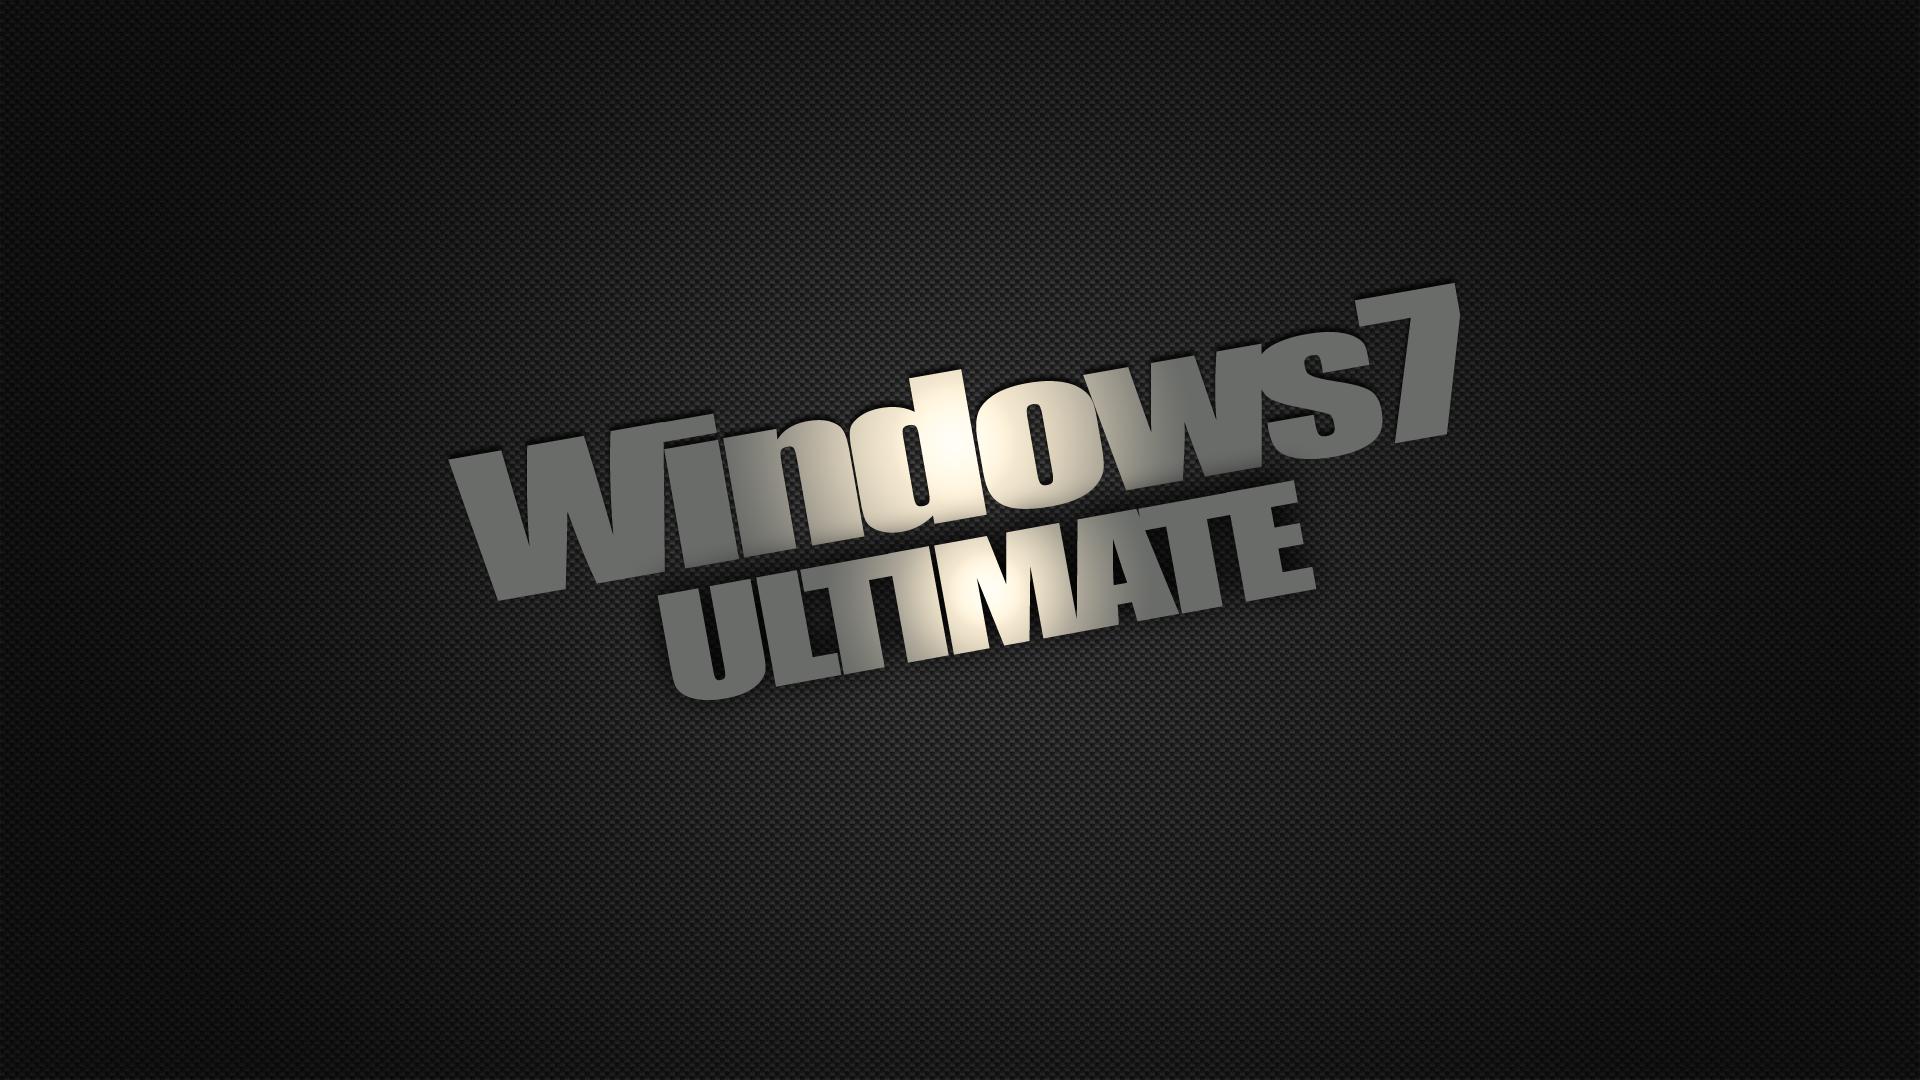 Windows 7 ultimate desktop background